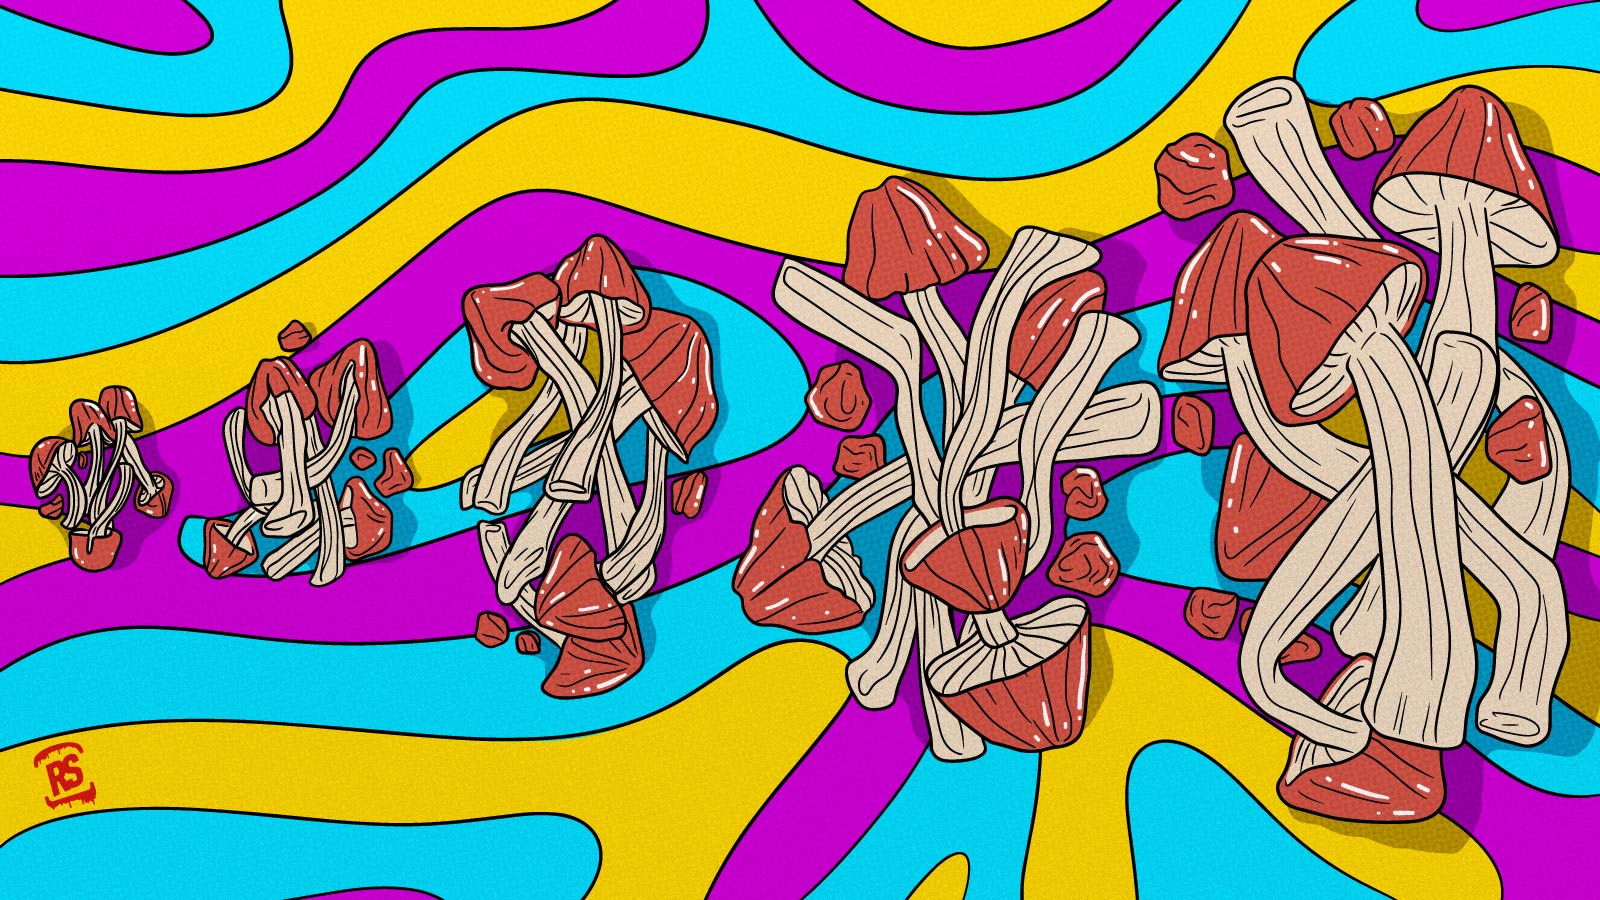 Magic Mushroom Dosage Guide: Microdosing to Heroic Doses